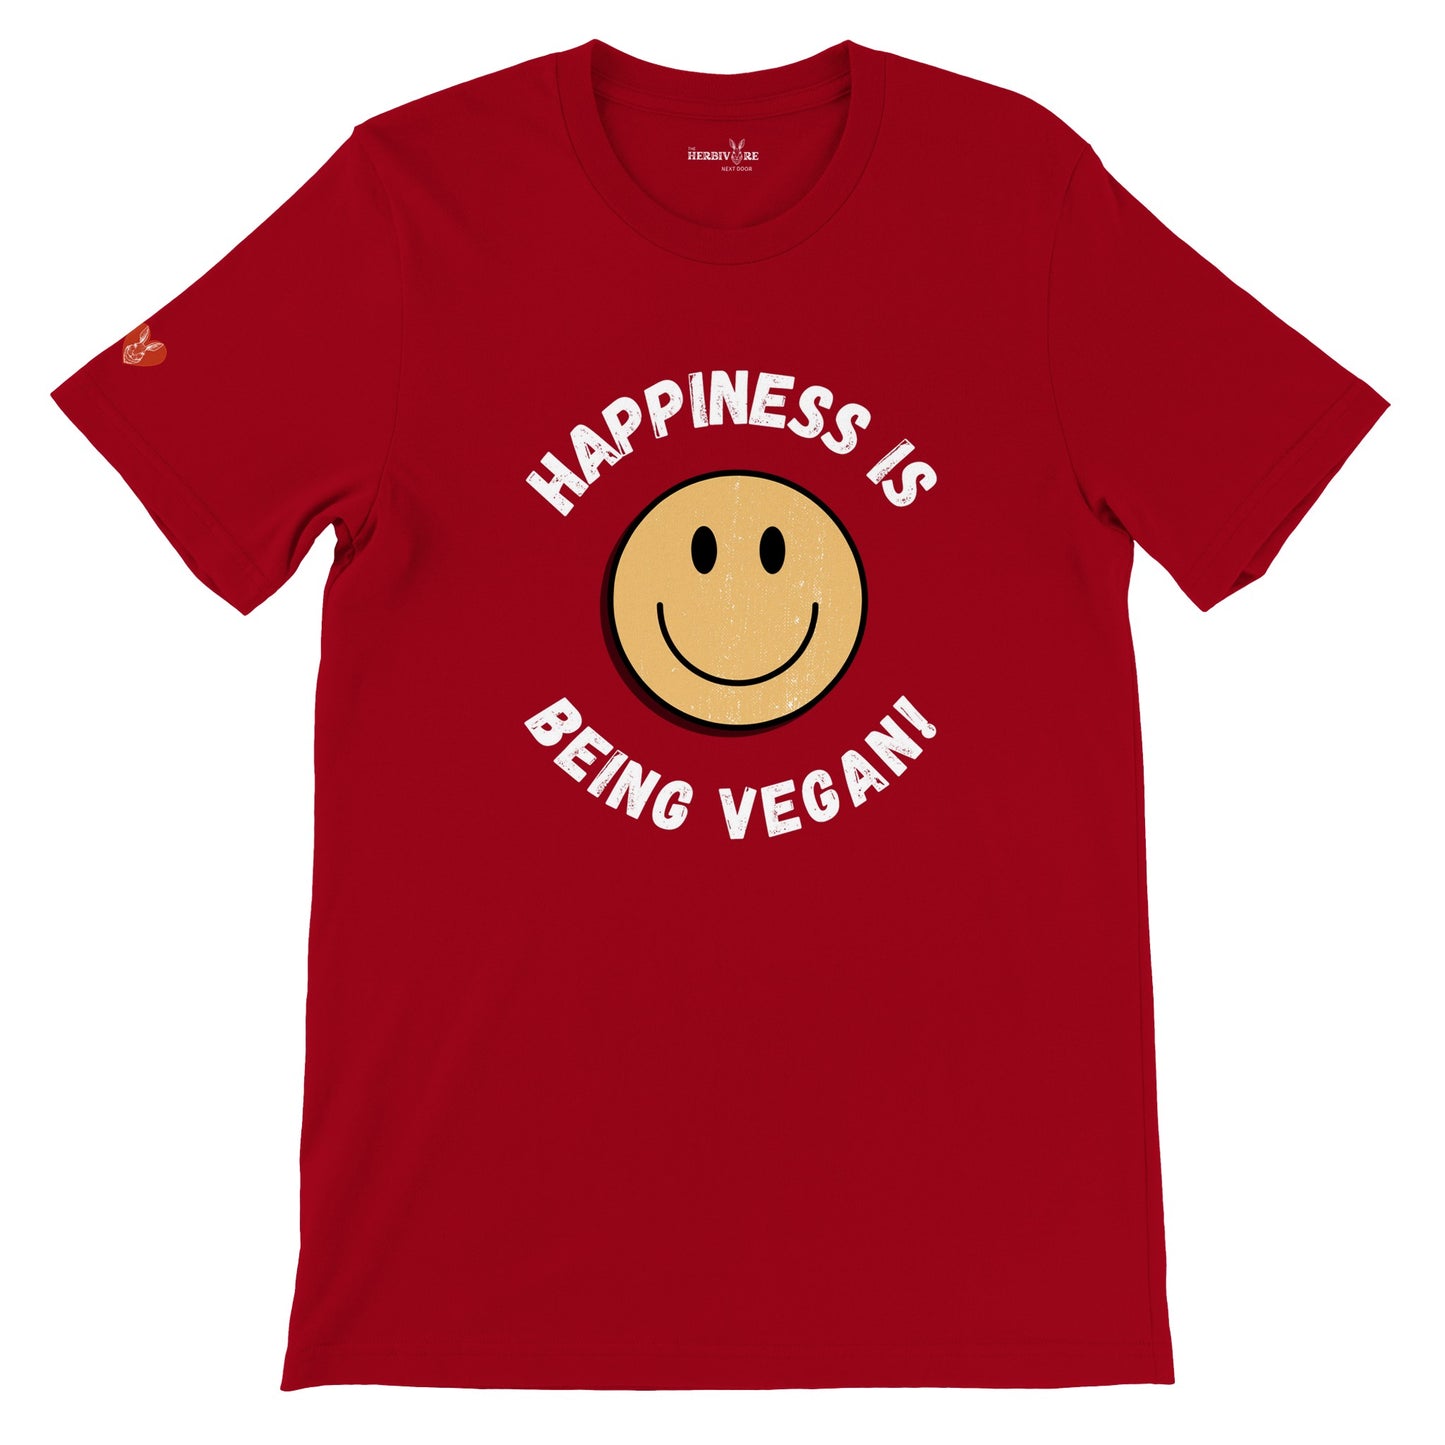 Happiness is - Unisex